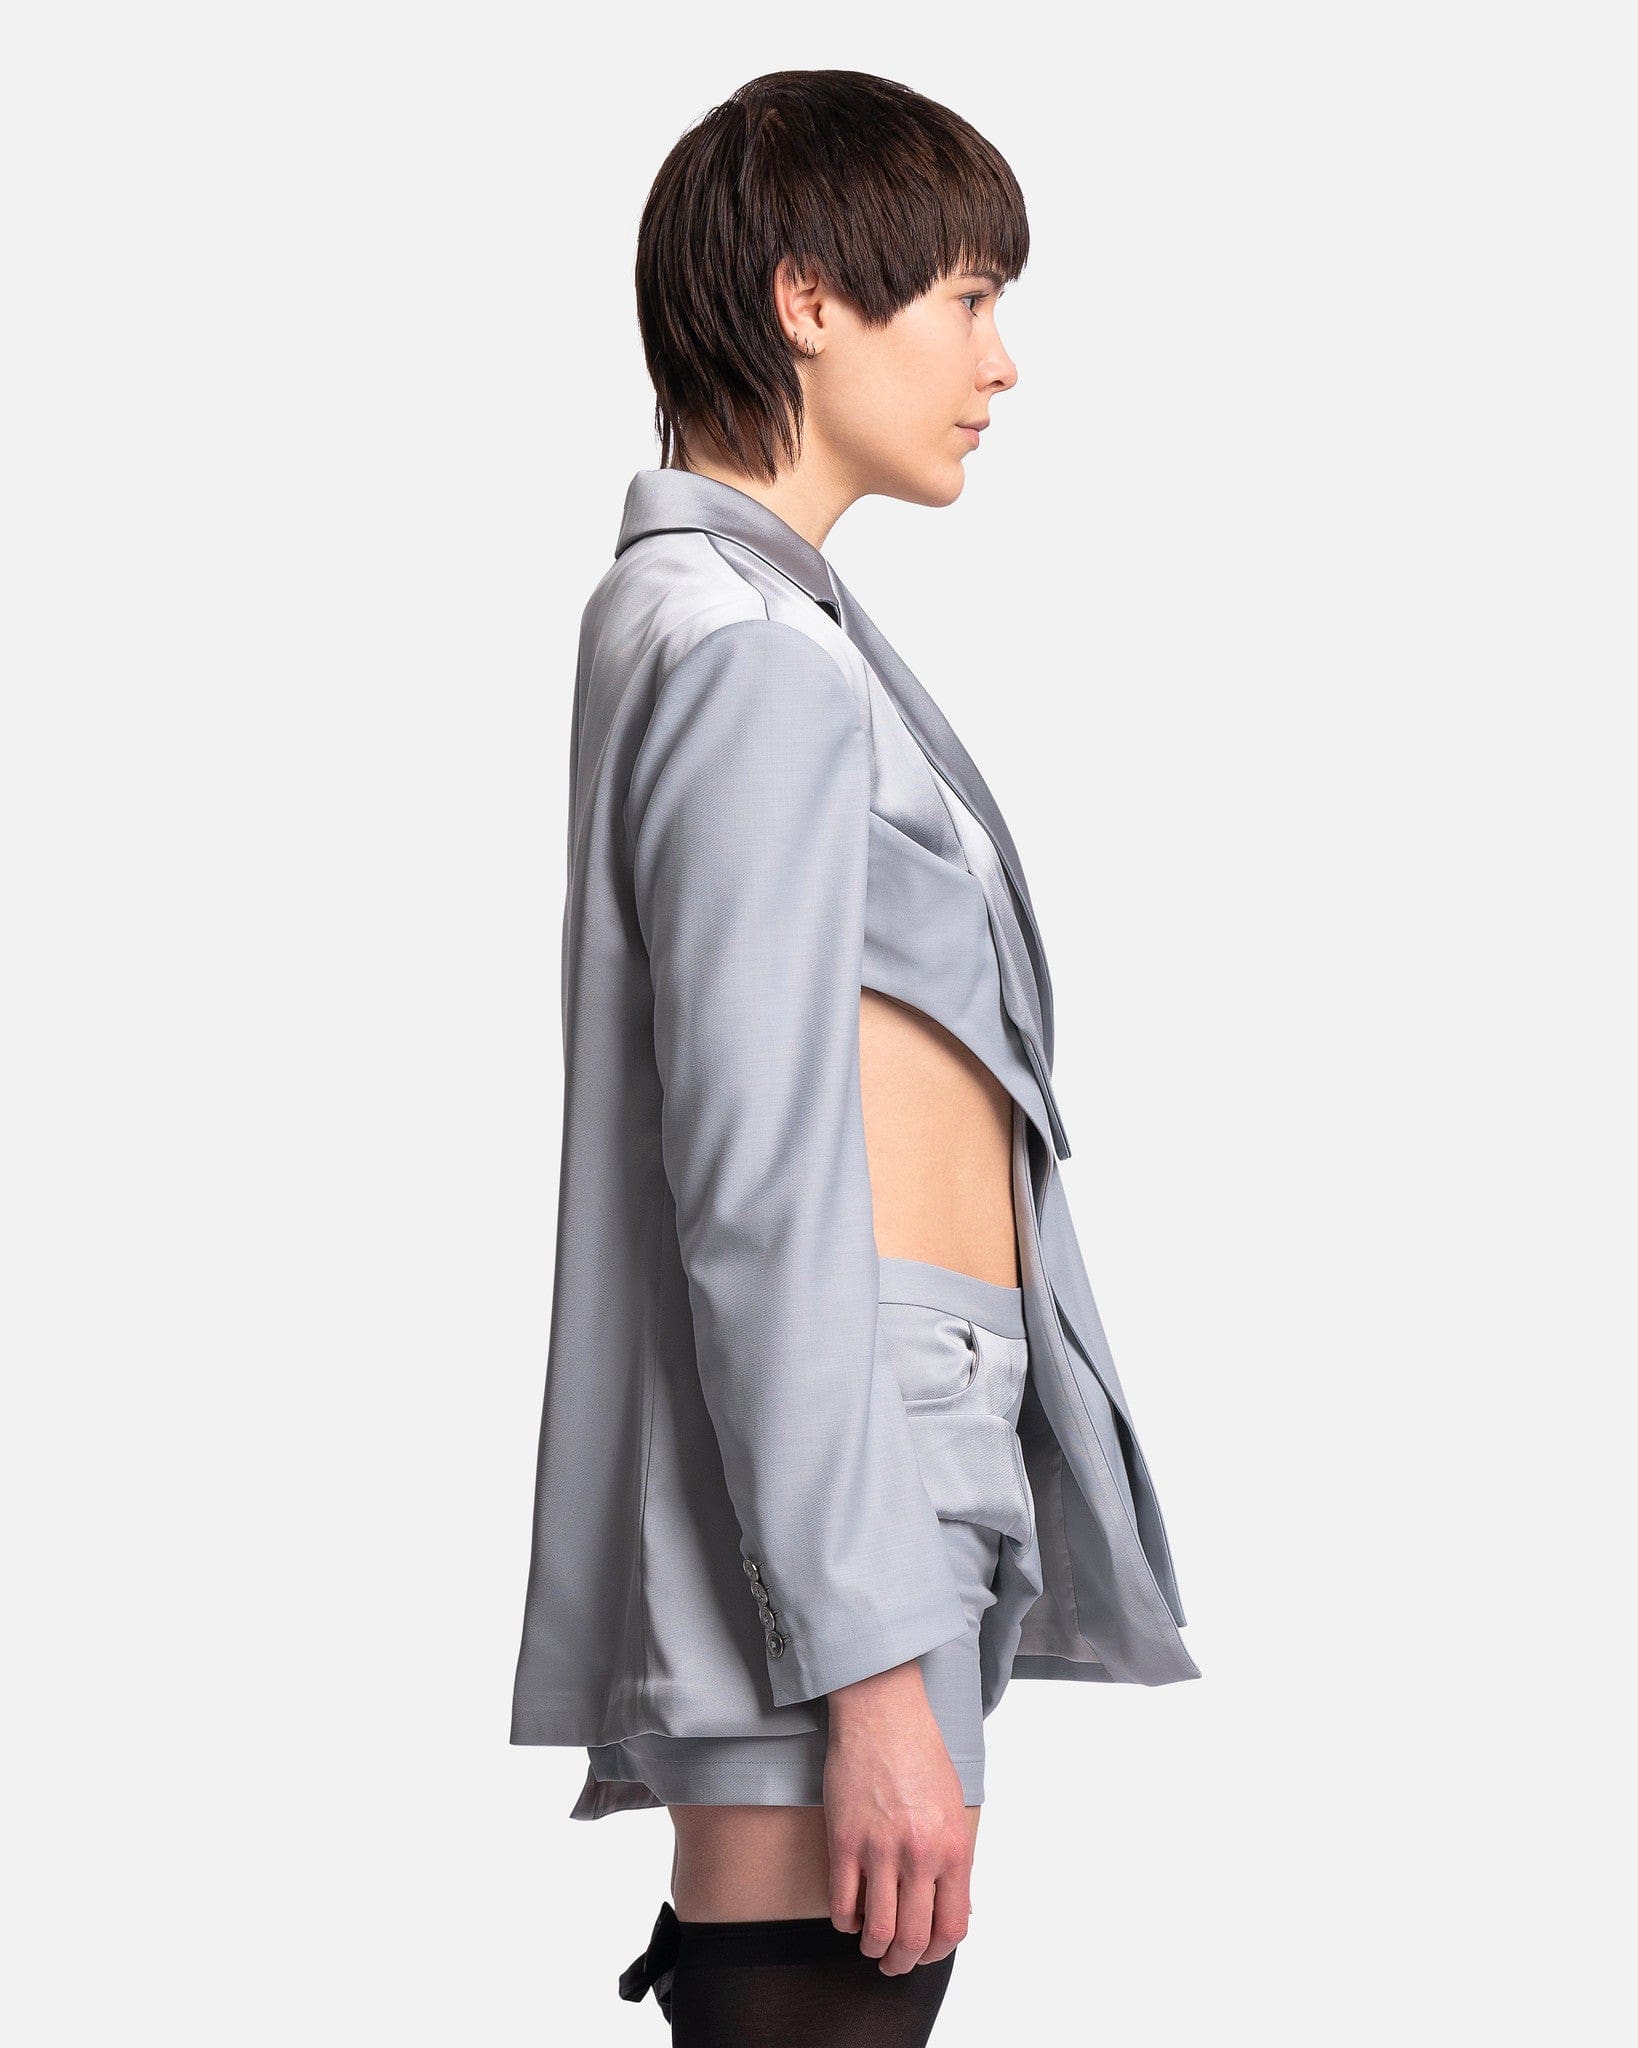 Feng Chen Wang Women Jackets Satin Deconstructed Blazer in Grey